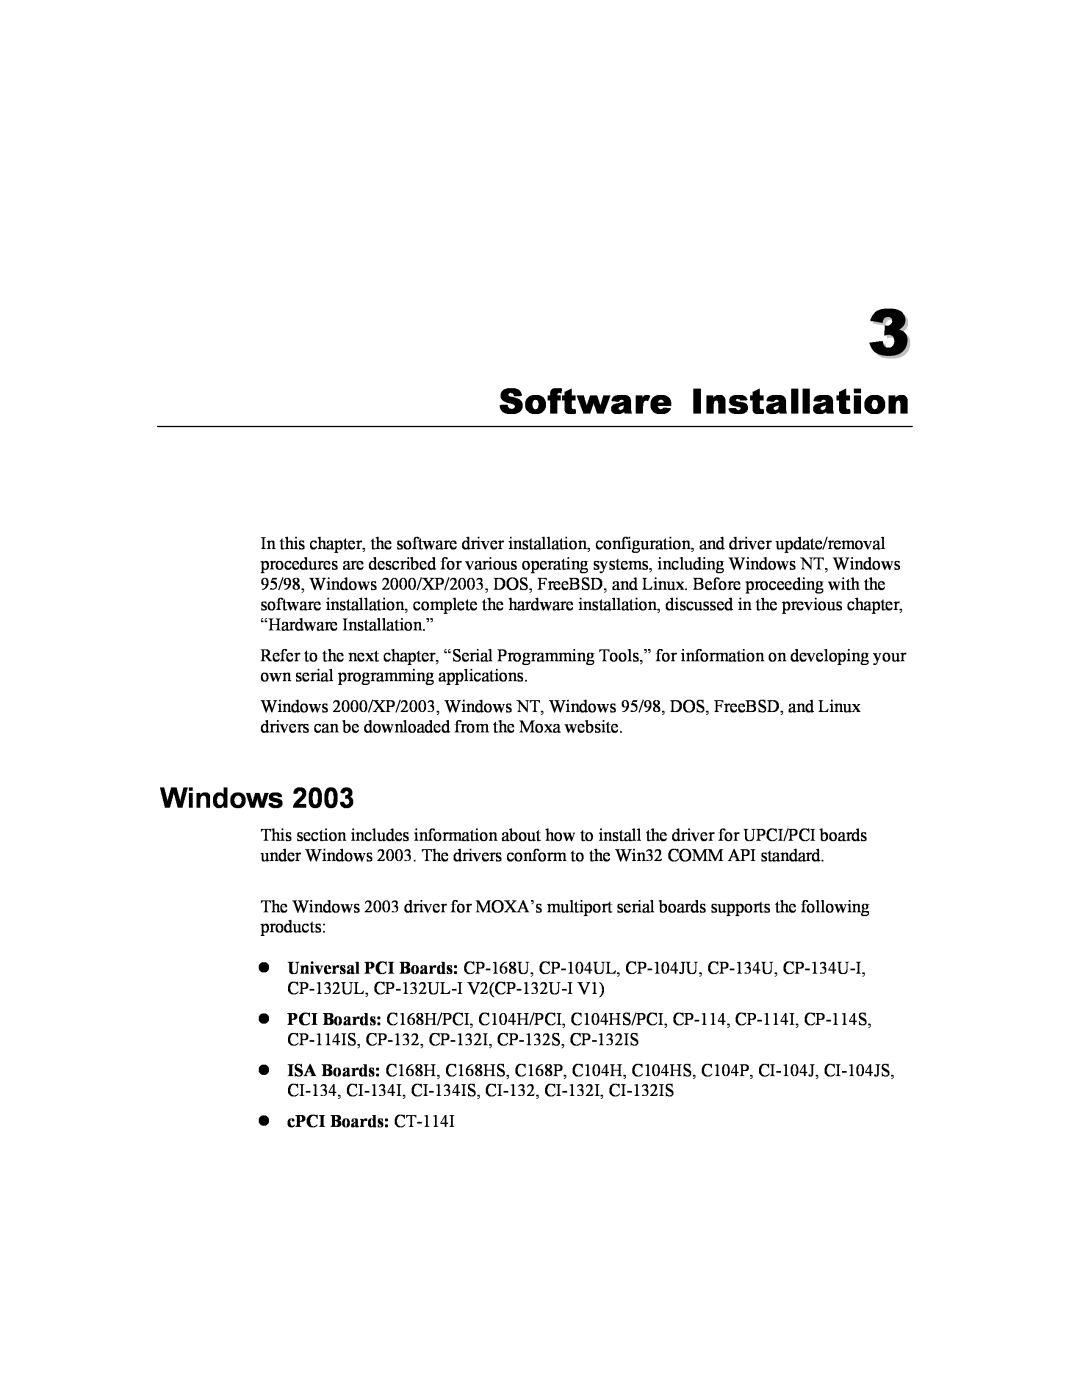 Moxa Technologies CP-132U Series user manual Software Installation, Windows, cPCI Boards CT-114I 